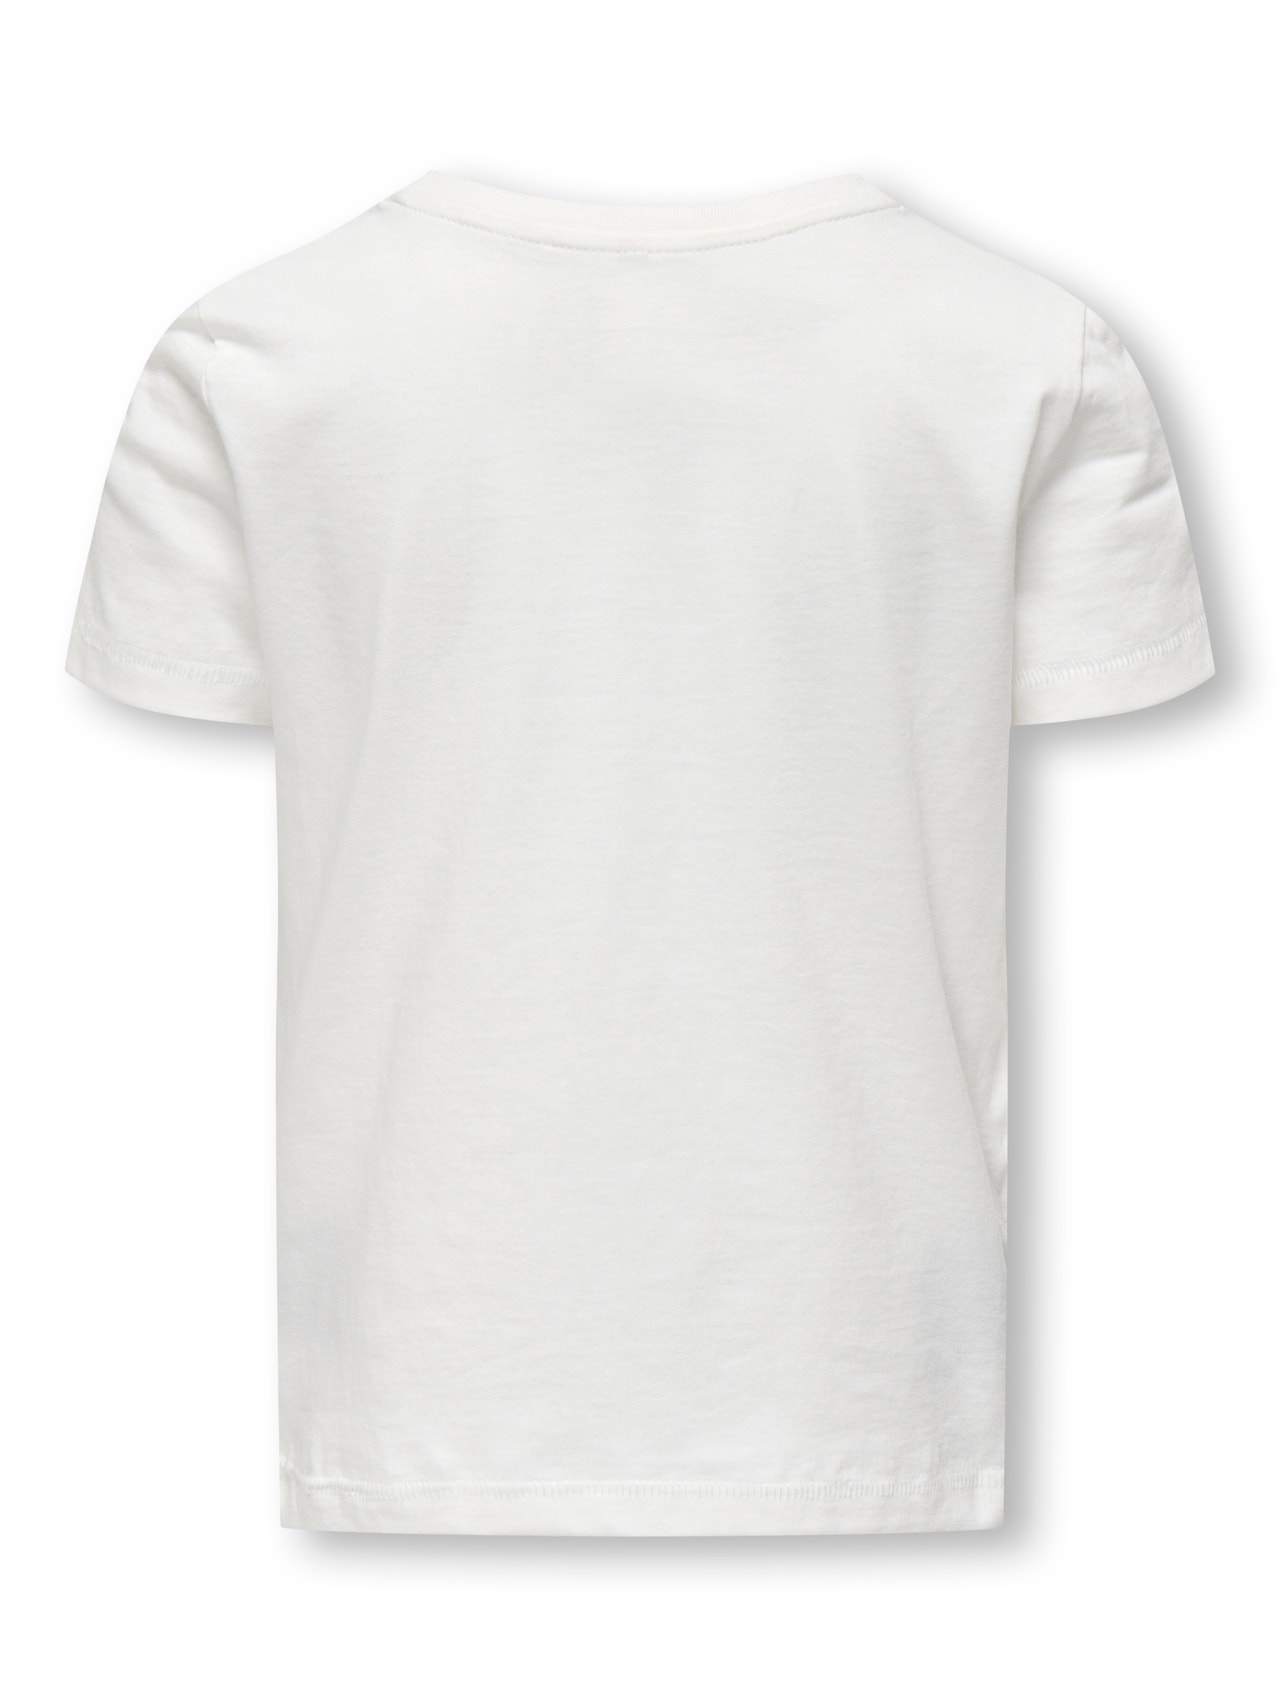 ONLY Camisetas Corte regular Cuello redondo -Cloud Dancer - 15296737